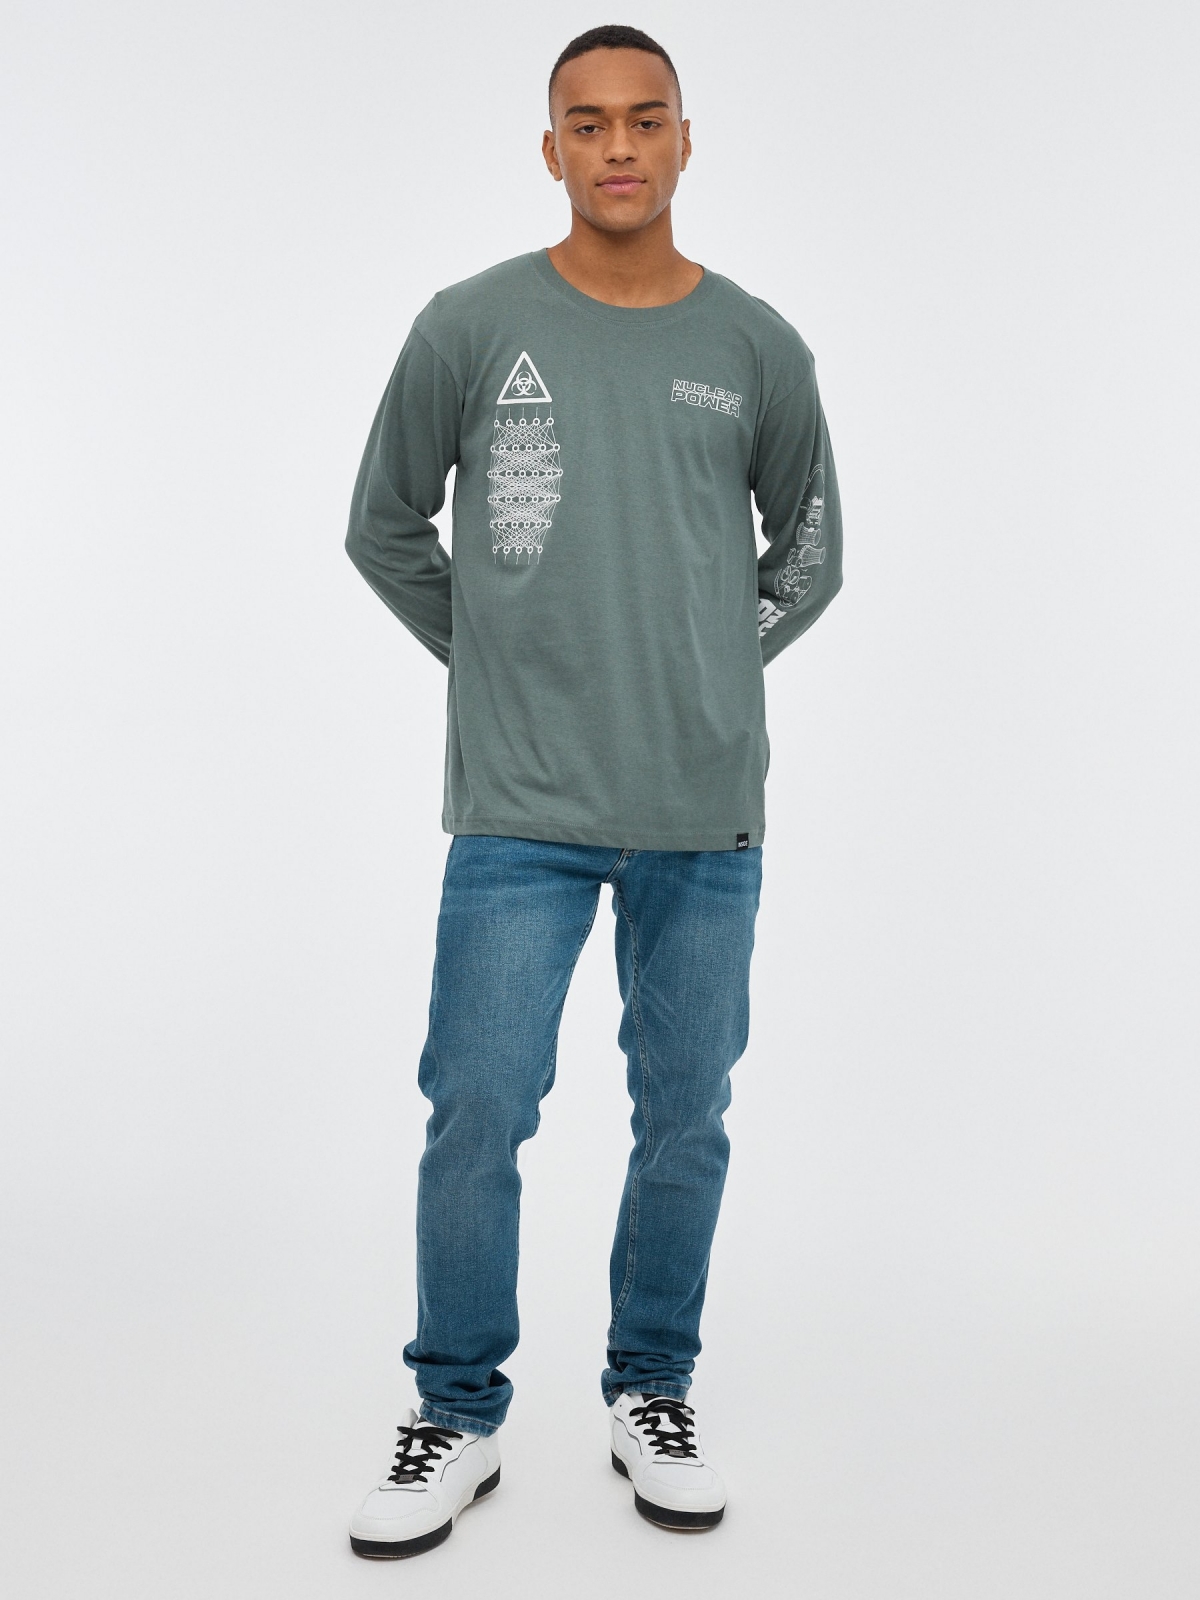 Camiseta print Power en manga verde grisáceo vista general frontal